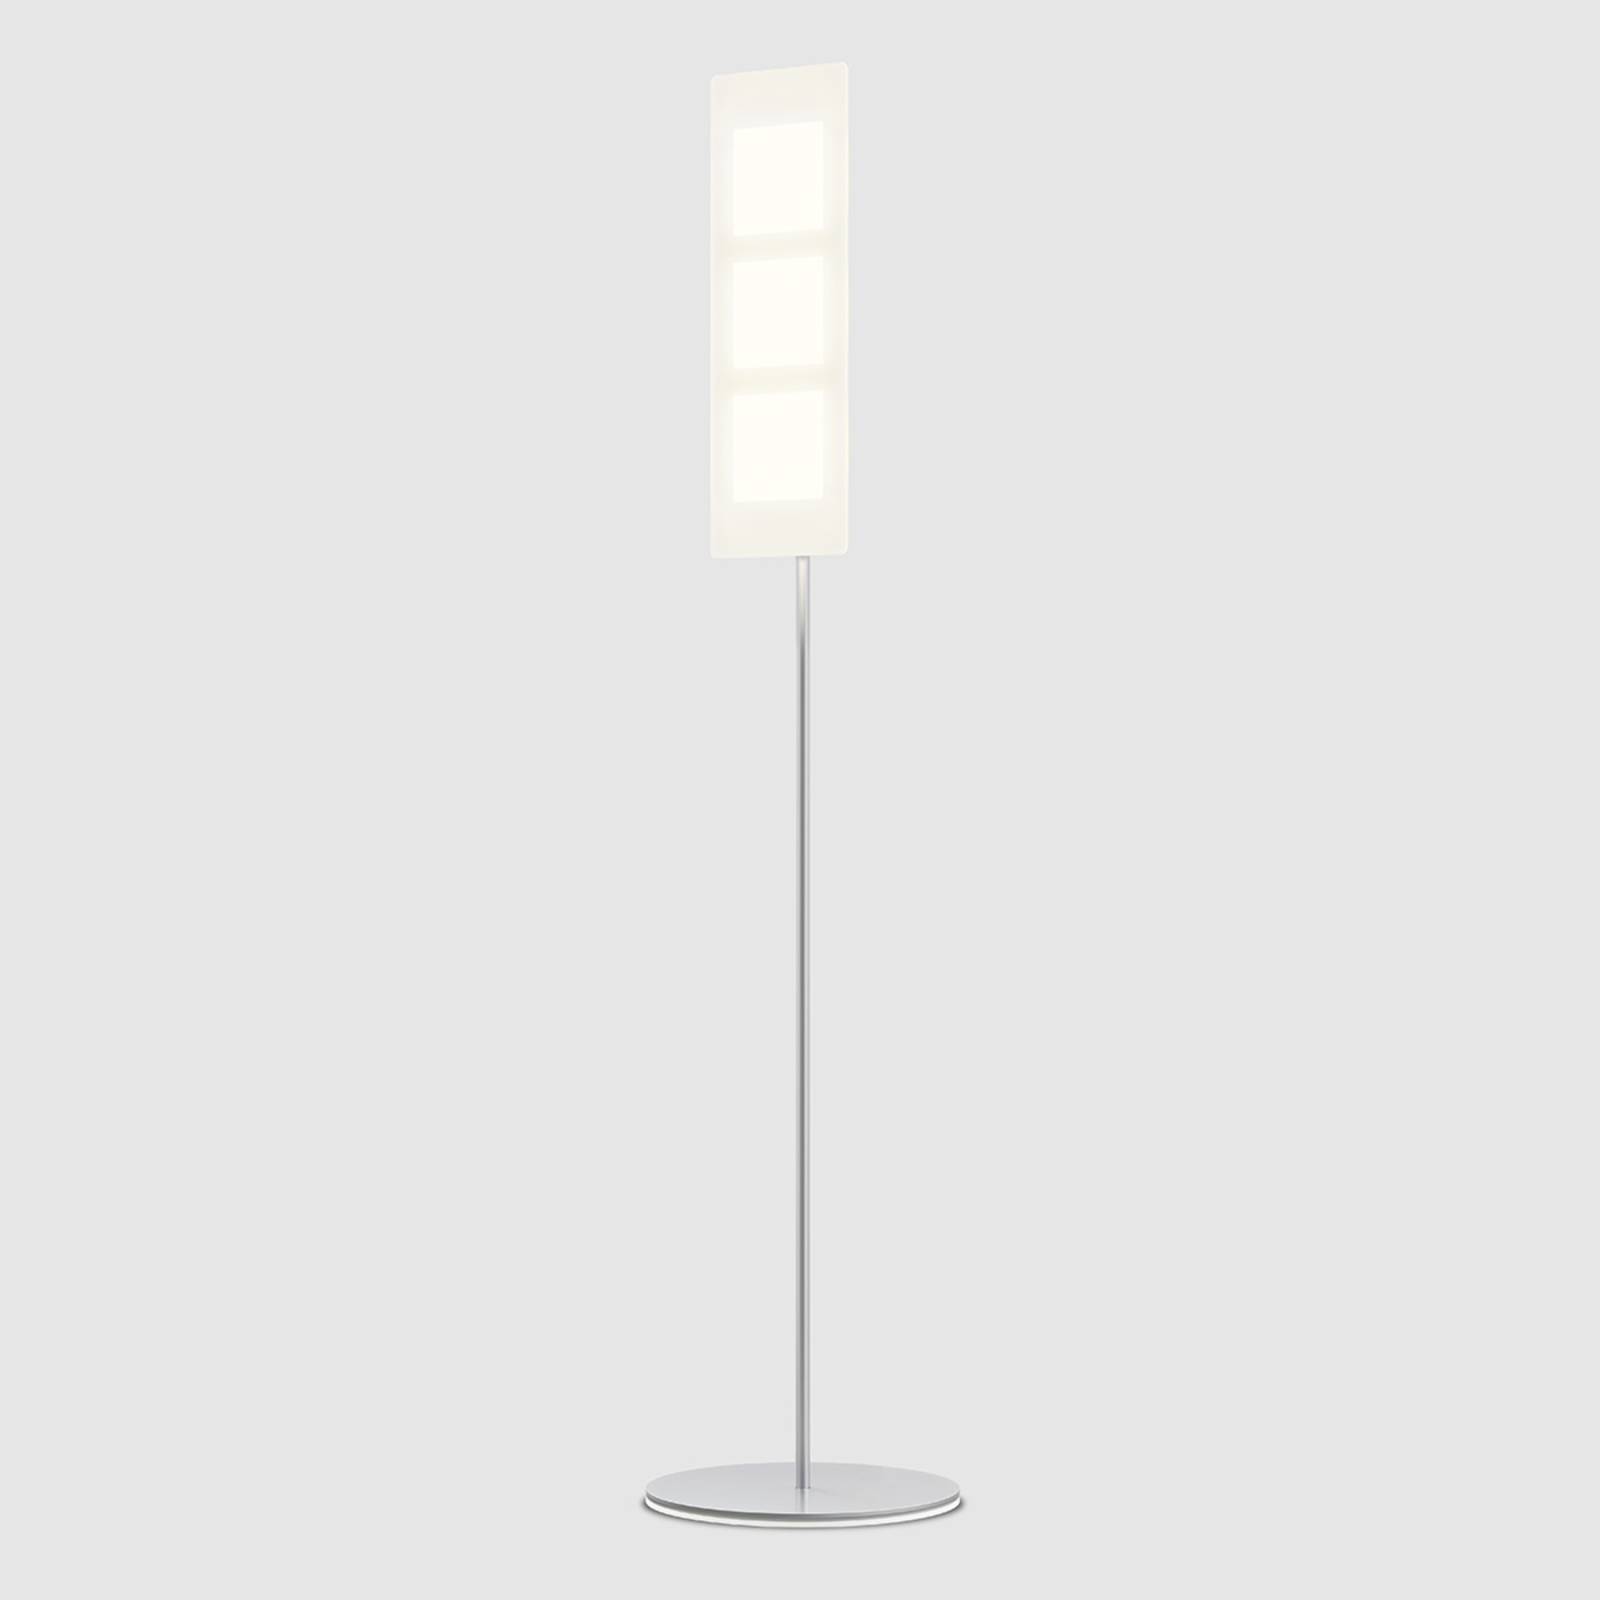 OMLED One f3 – OLED-gulvlampe i sort